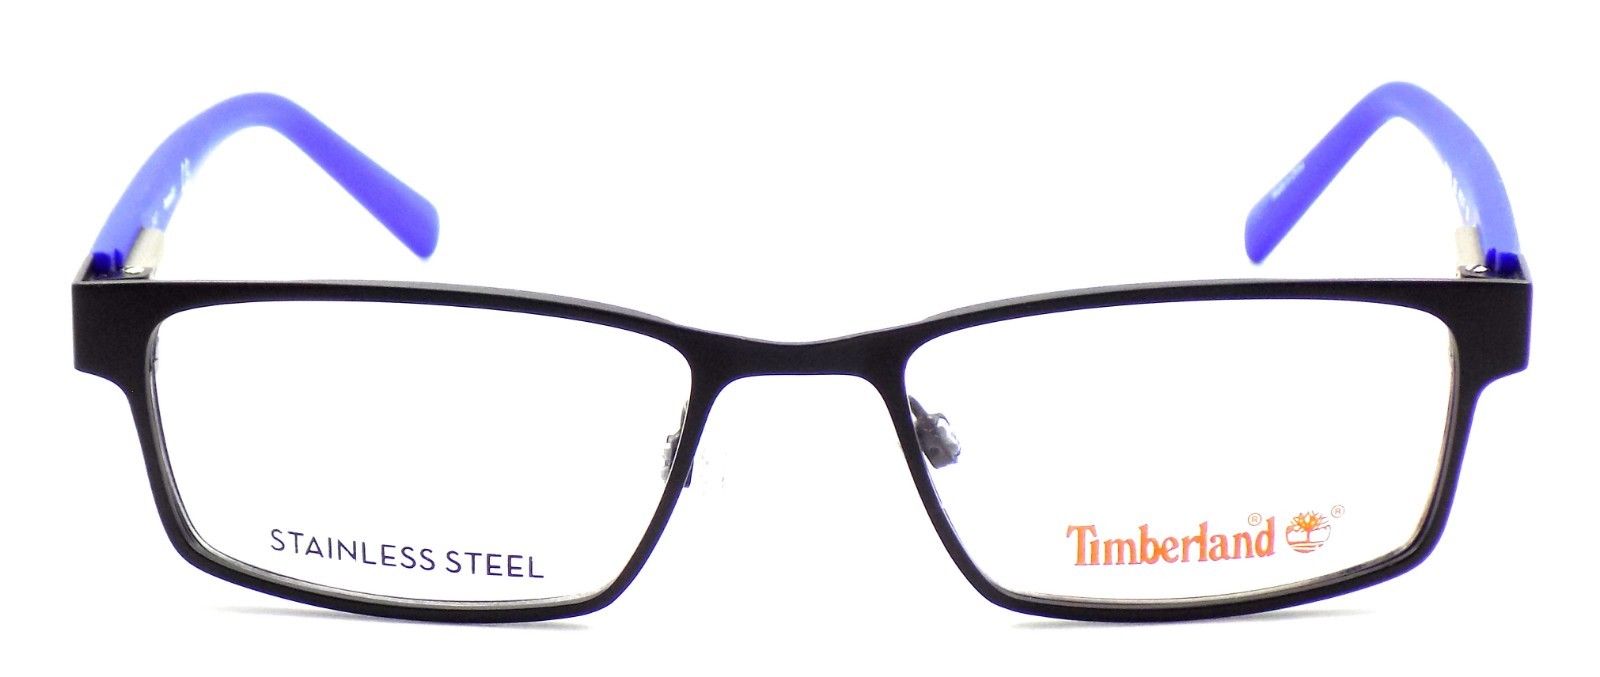 2-TIMBERLAND TB5056 002 Eyeglasses Frames SMALL 49-17-130 Matte Black + CASE-664689641468-IKSpecs